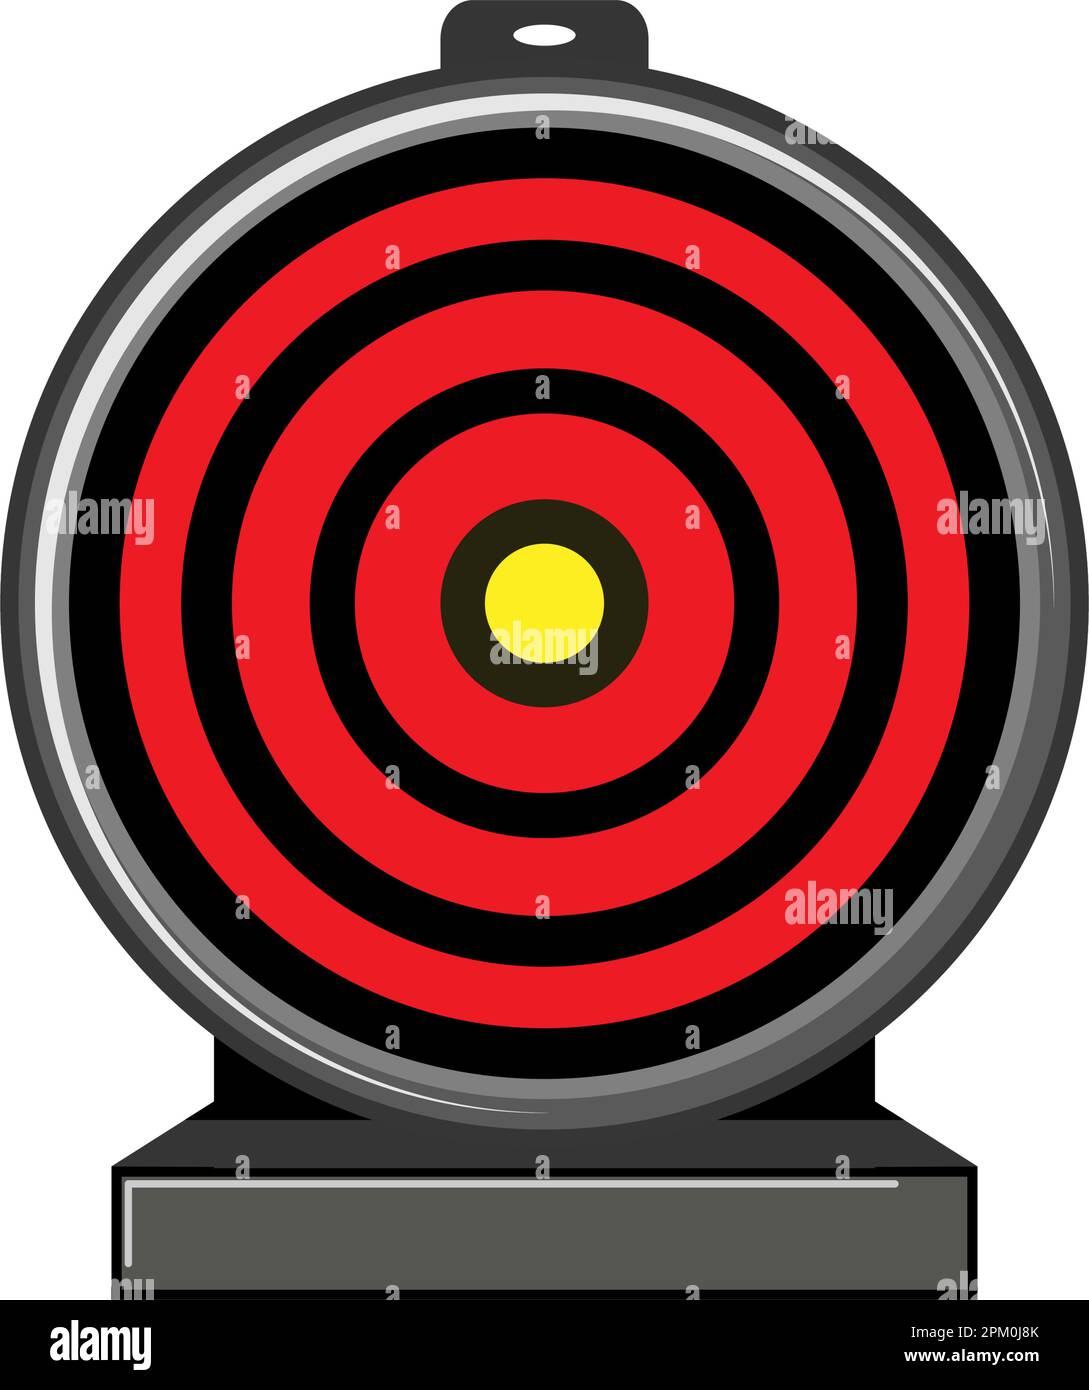 Range Shooting Target Cartoon Vector Illustration Stock Vector Image